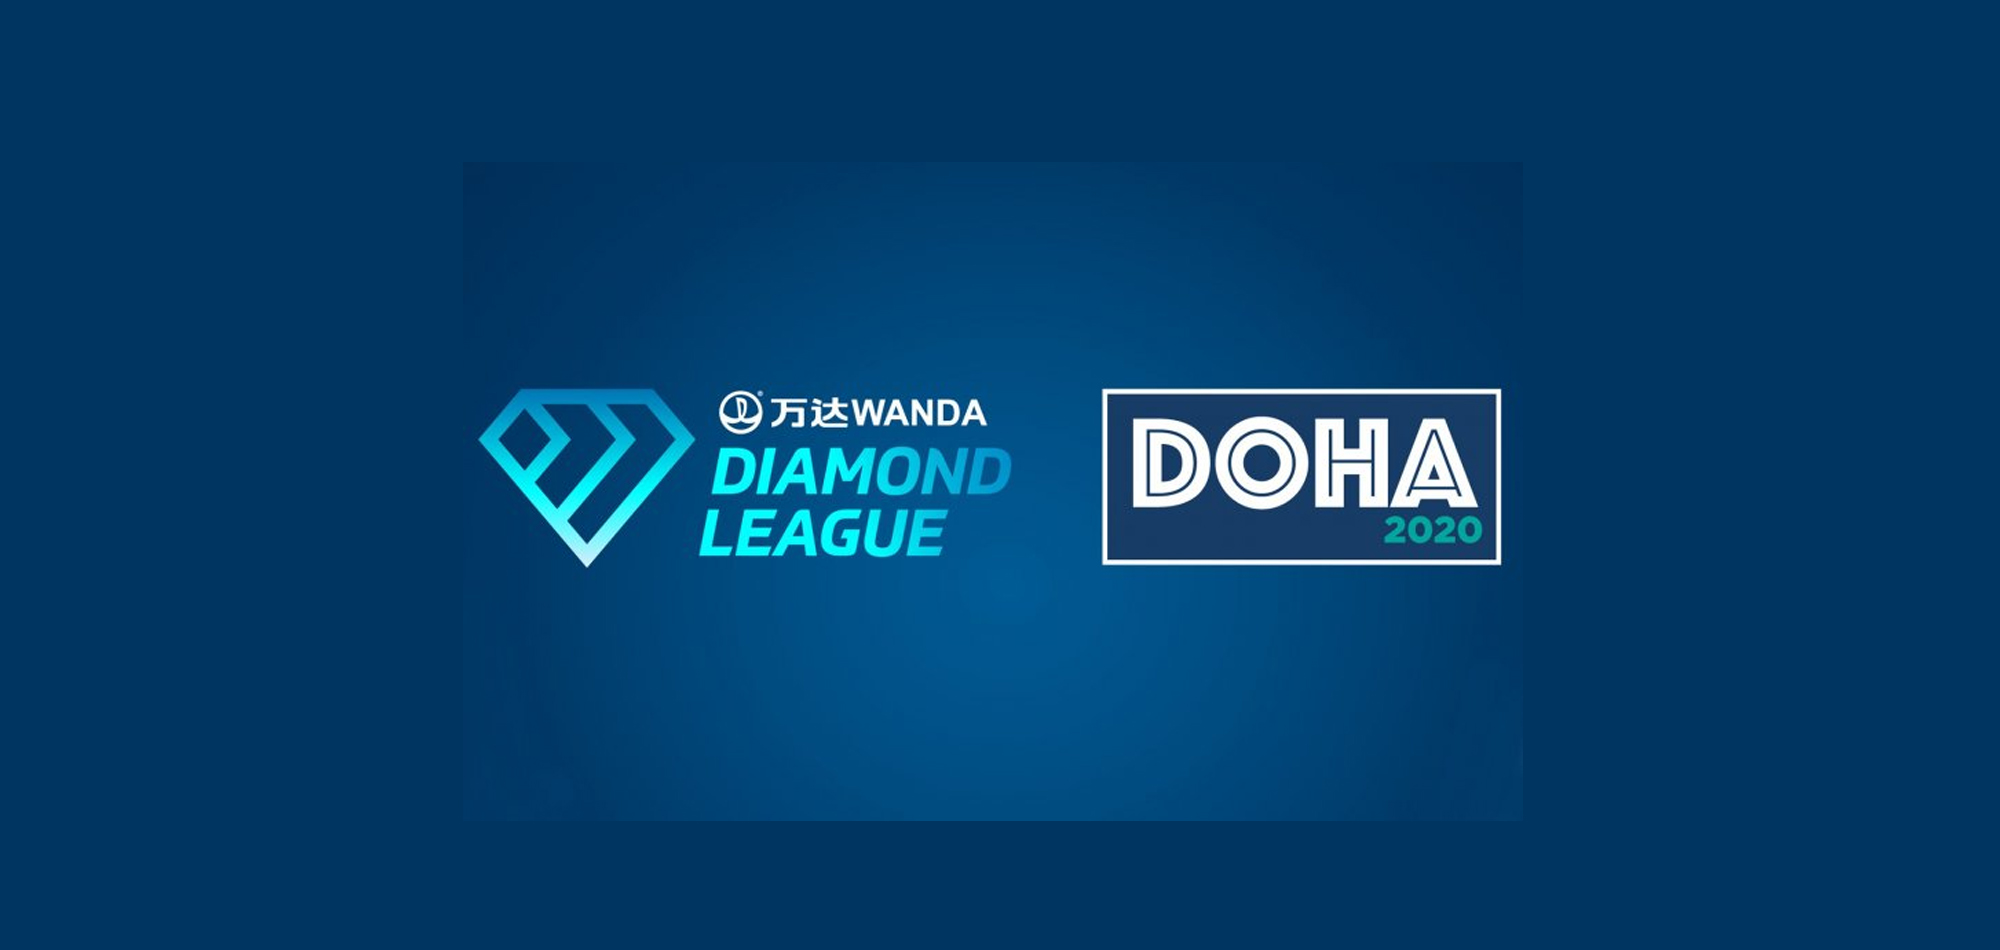 Doha Diamond League to be held on May 28